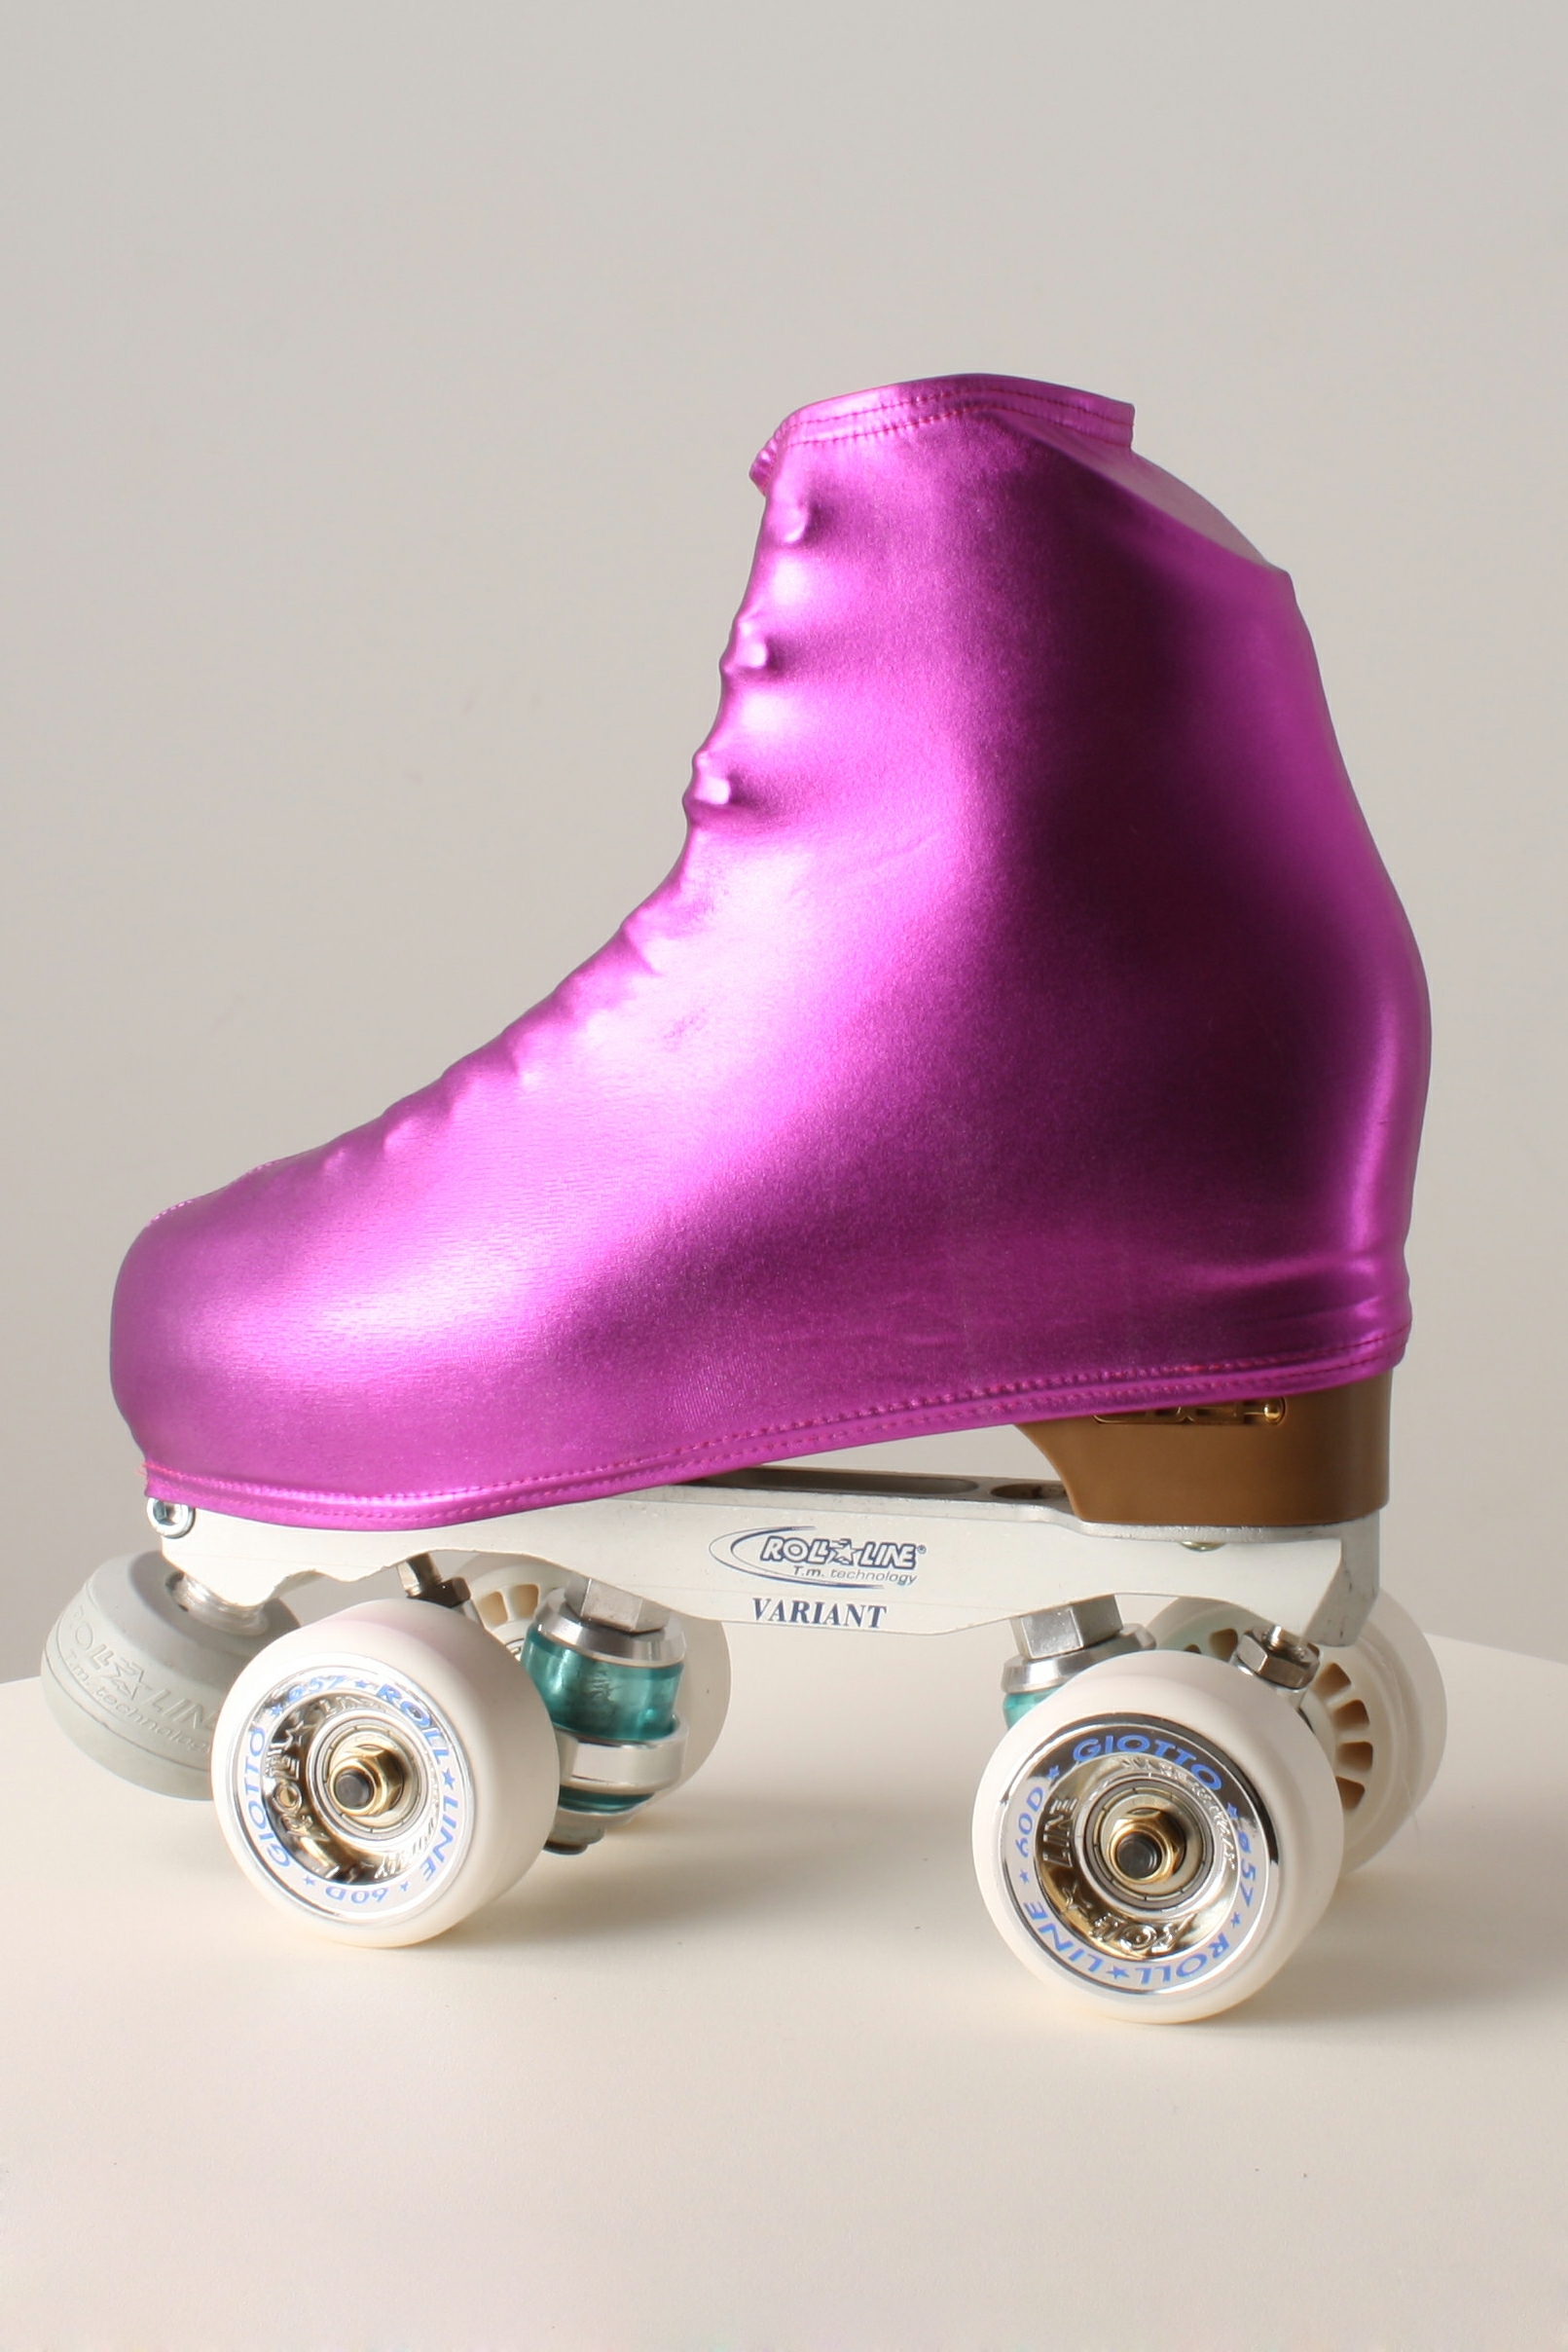 Fundas patin , fundas personalizadas , cubre patín ,diseños únicos , patin  4 ruedas , patines , protege patín , funda protectora , lycra -  España